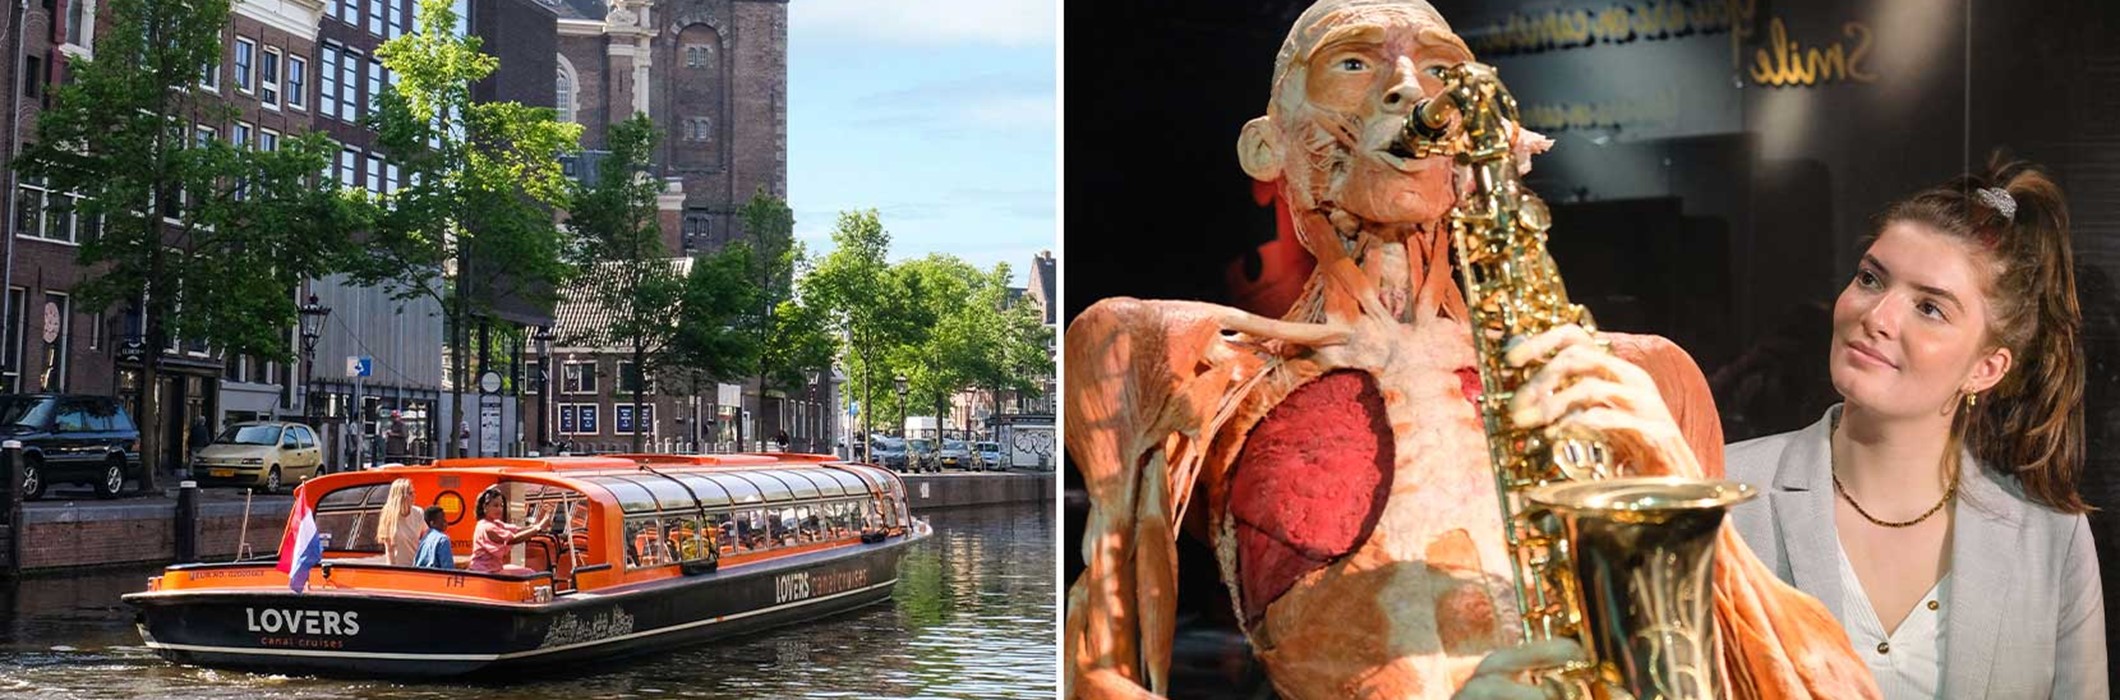 BODY WORLDS + Amsterdam Canal Cruise